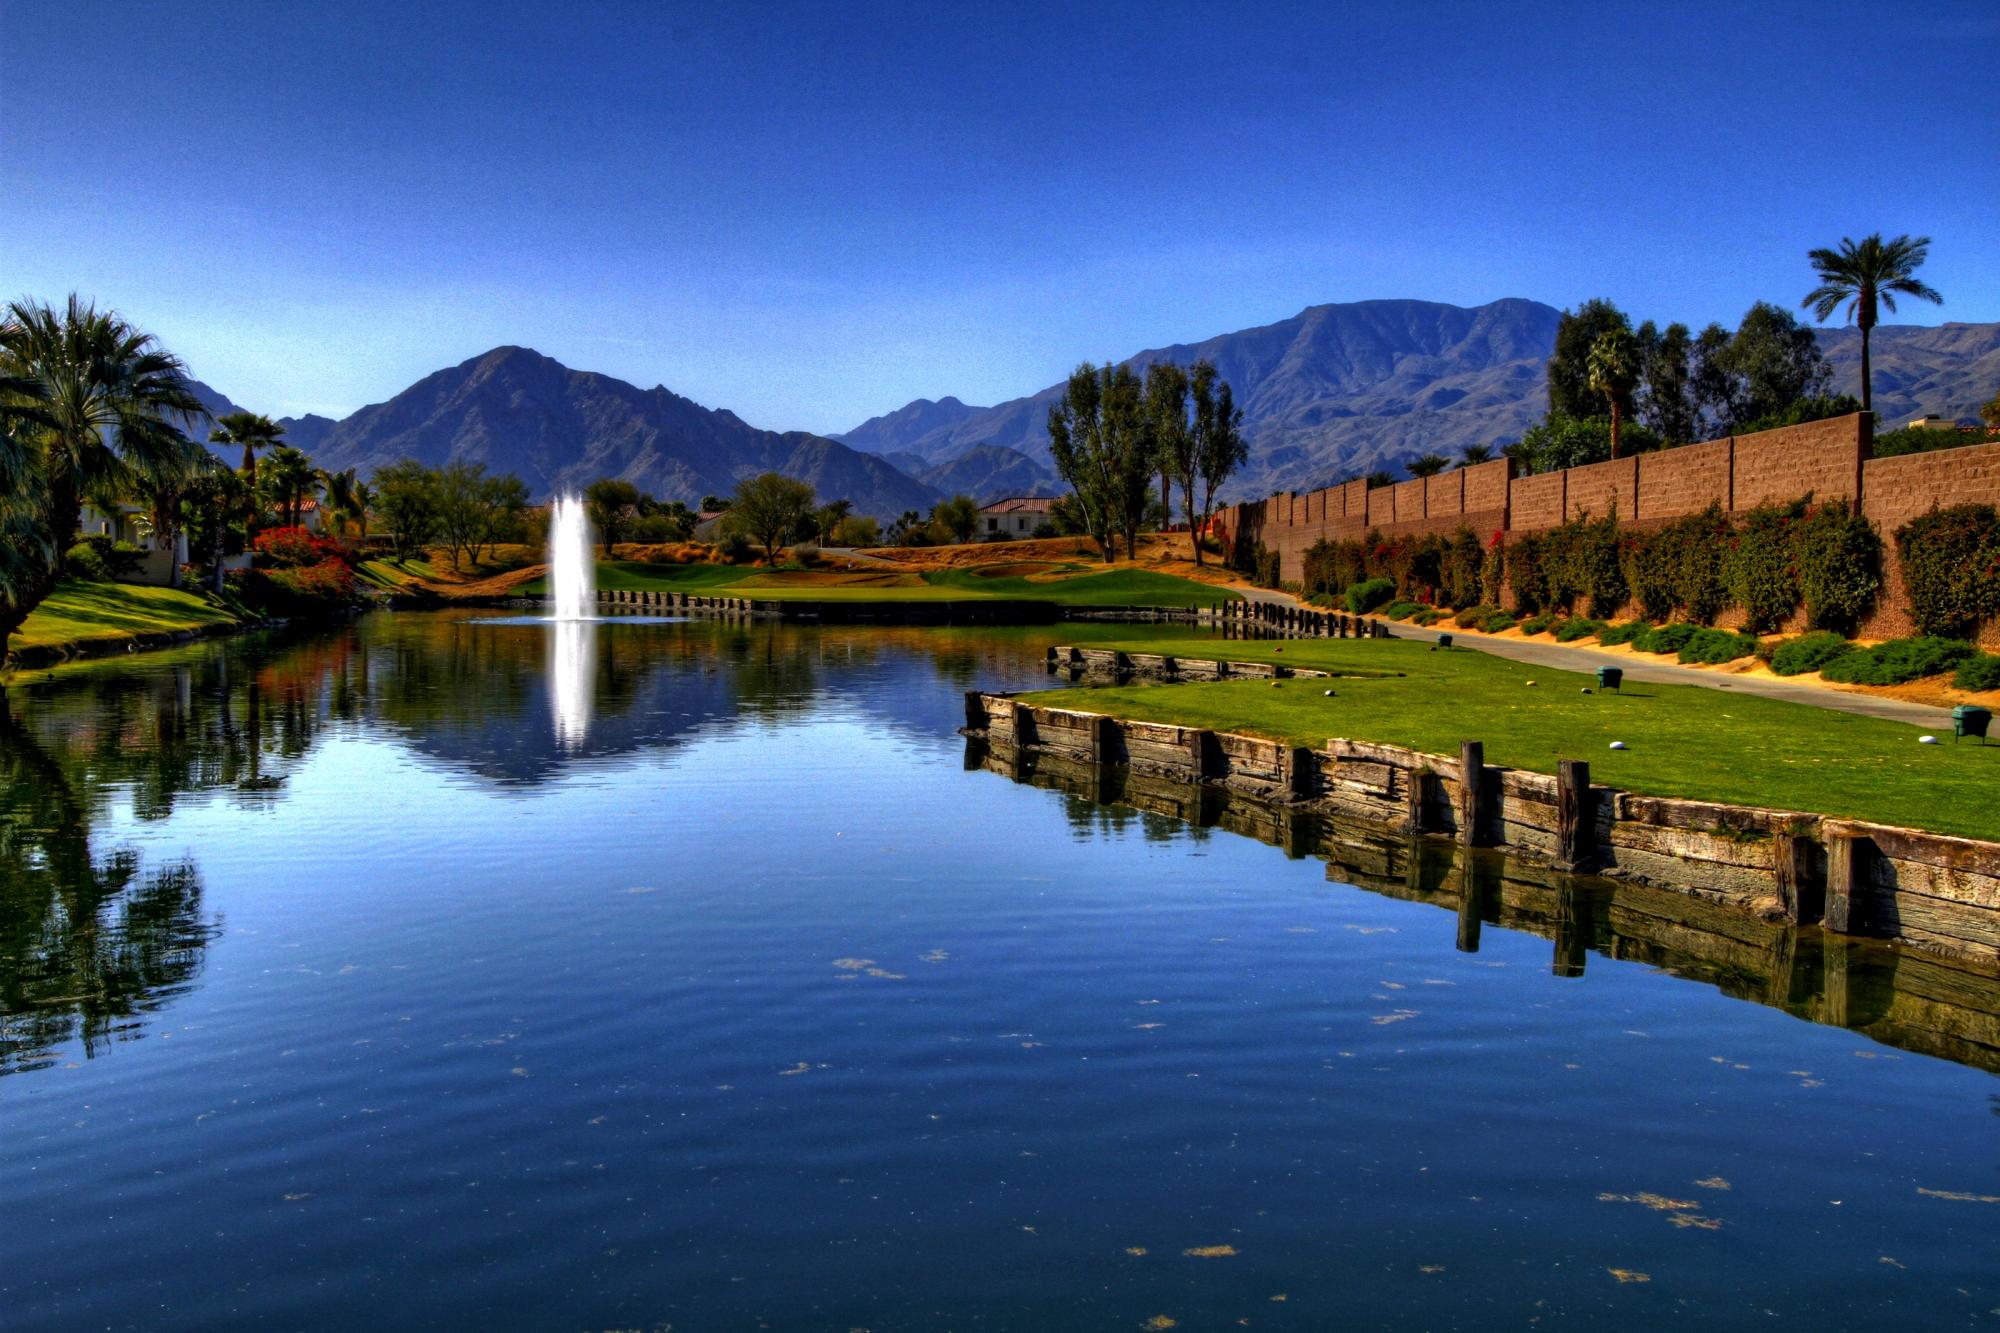 All The La Quinta Resort Golf's scenic golf course within sensational California.